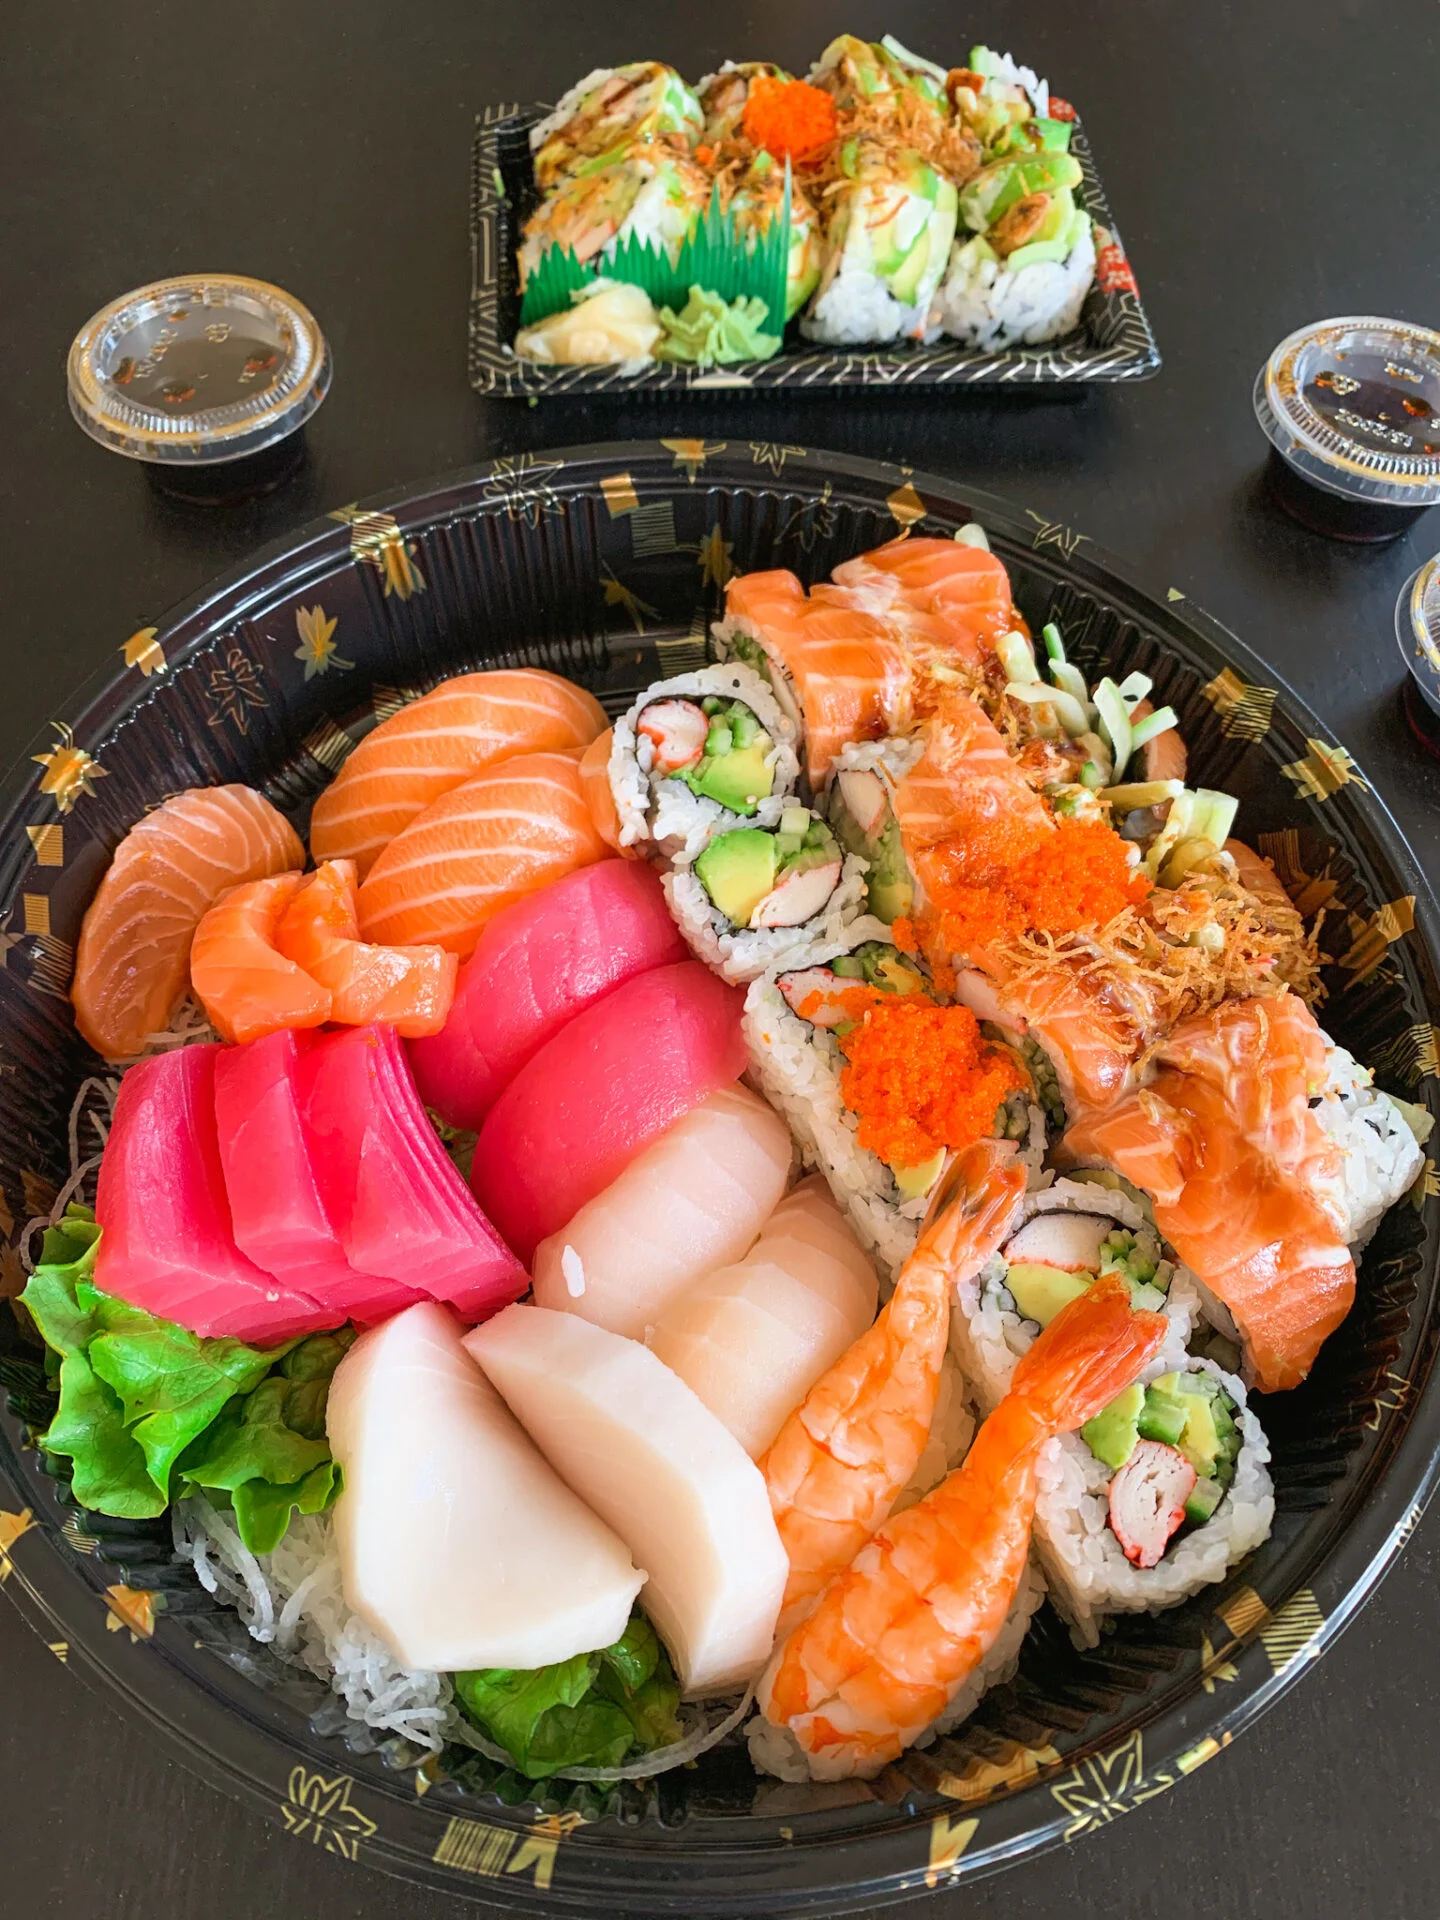 Sashimi, sushi, and maki platter from Aira Sushi in Richmond Hill, Ontario